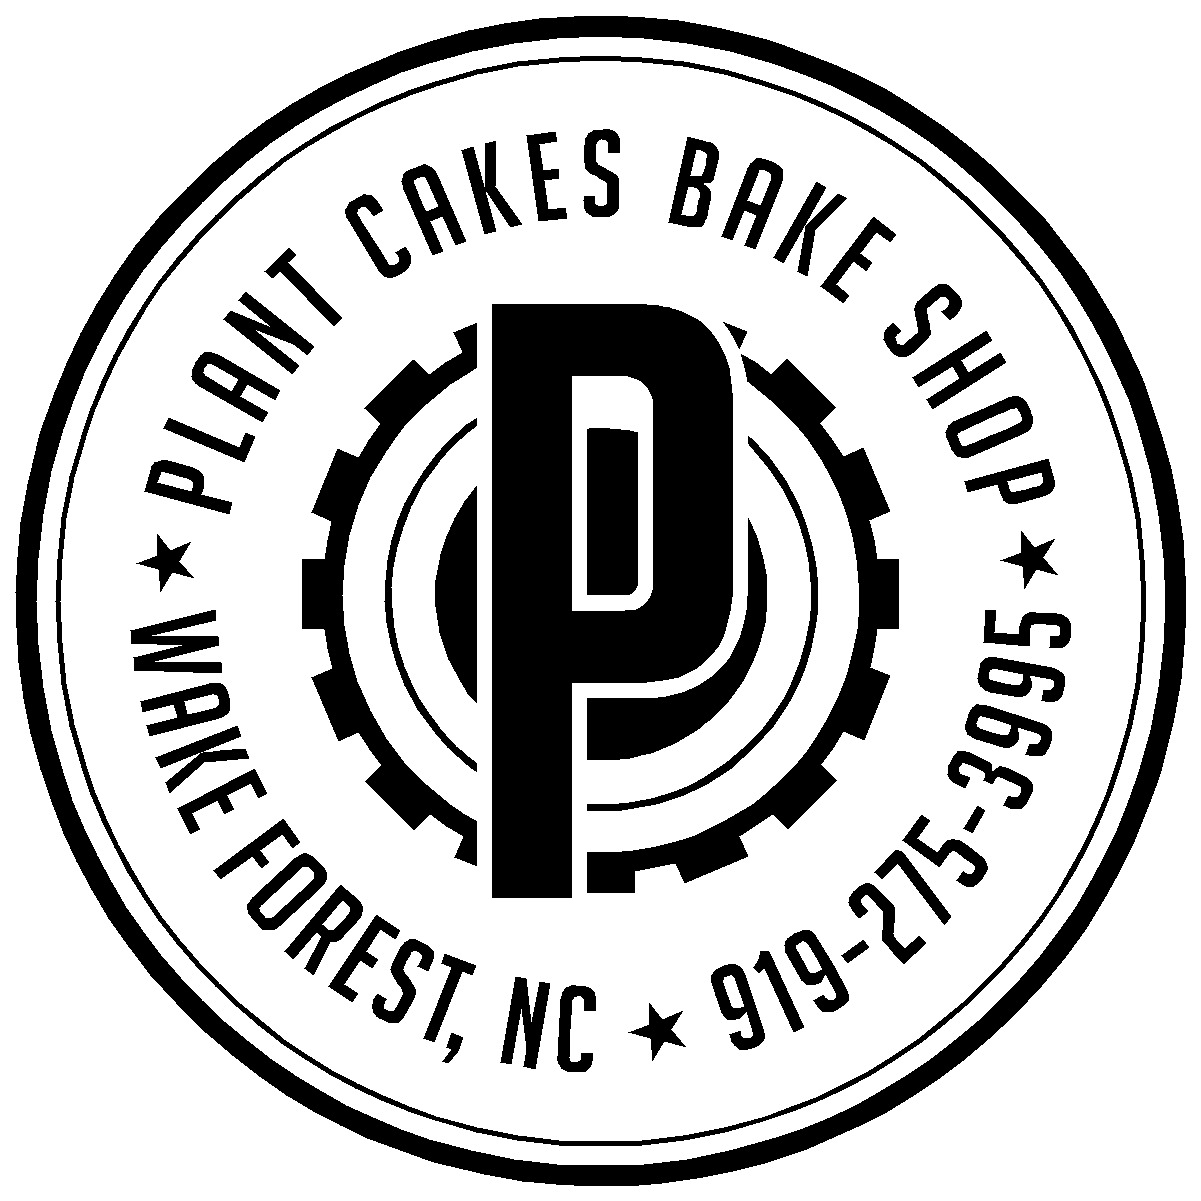 Sponsor Plant Cakes Bake Shop